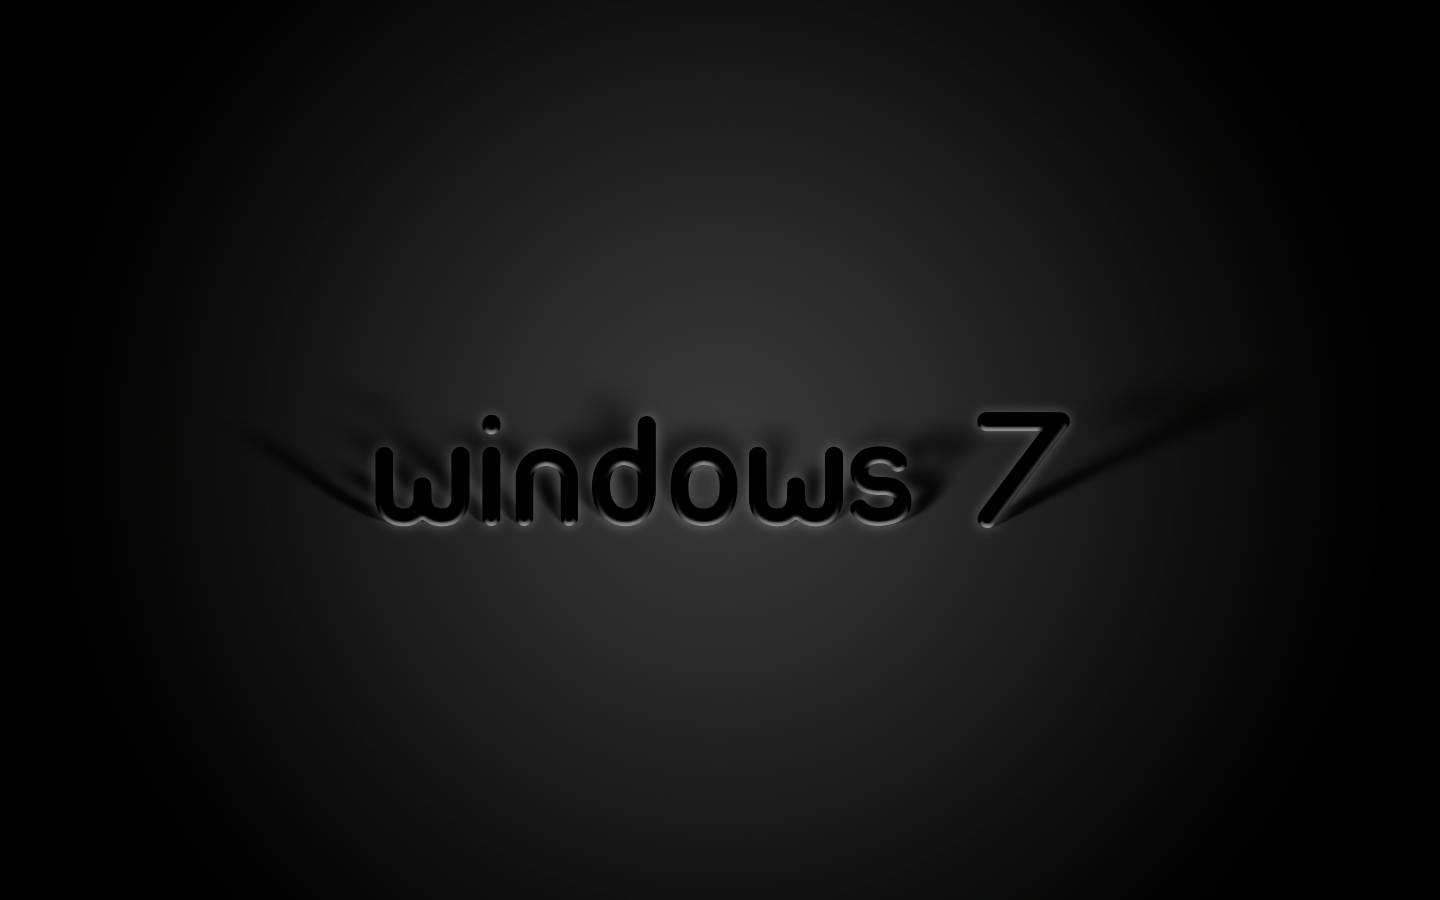 windows 7 wallpaper widescreen hd black